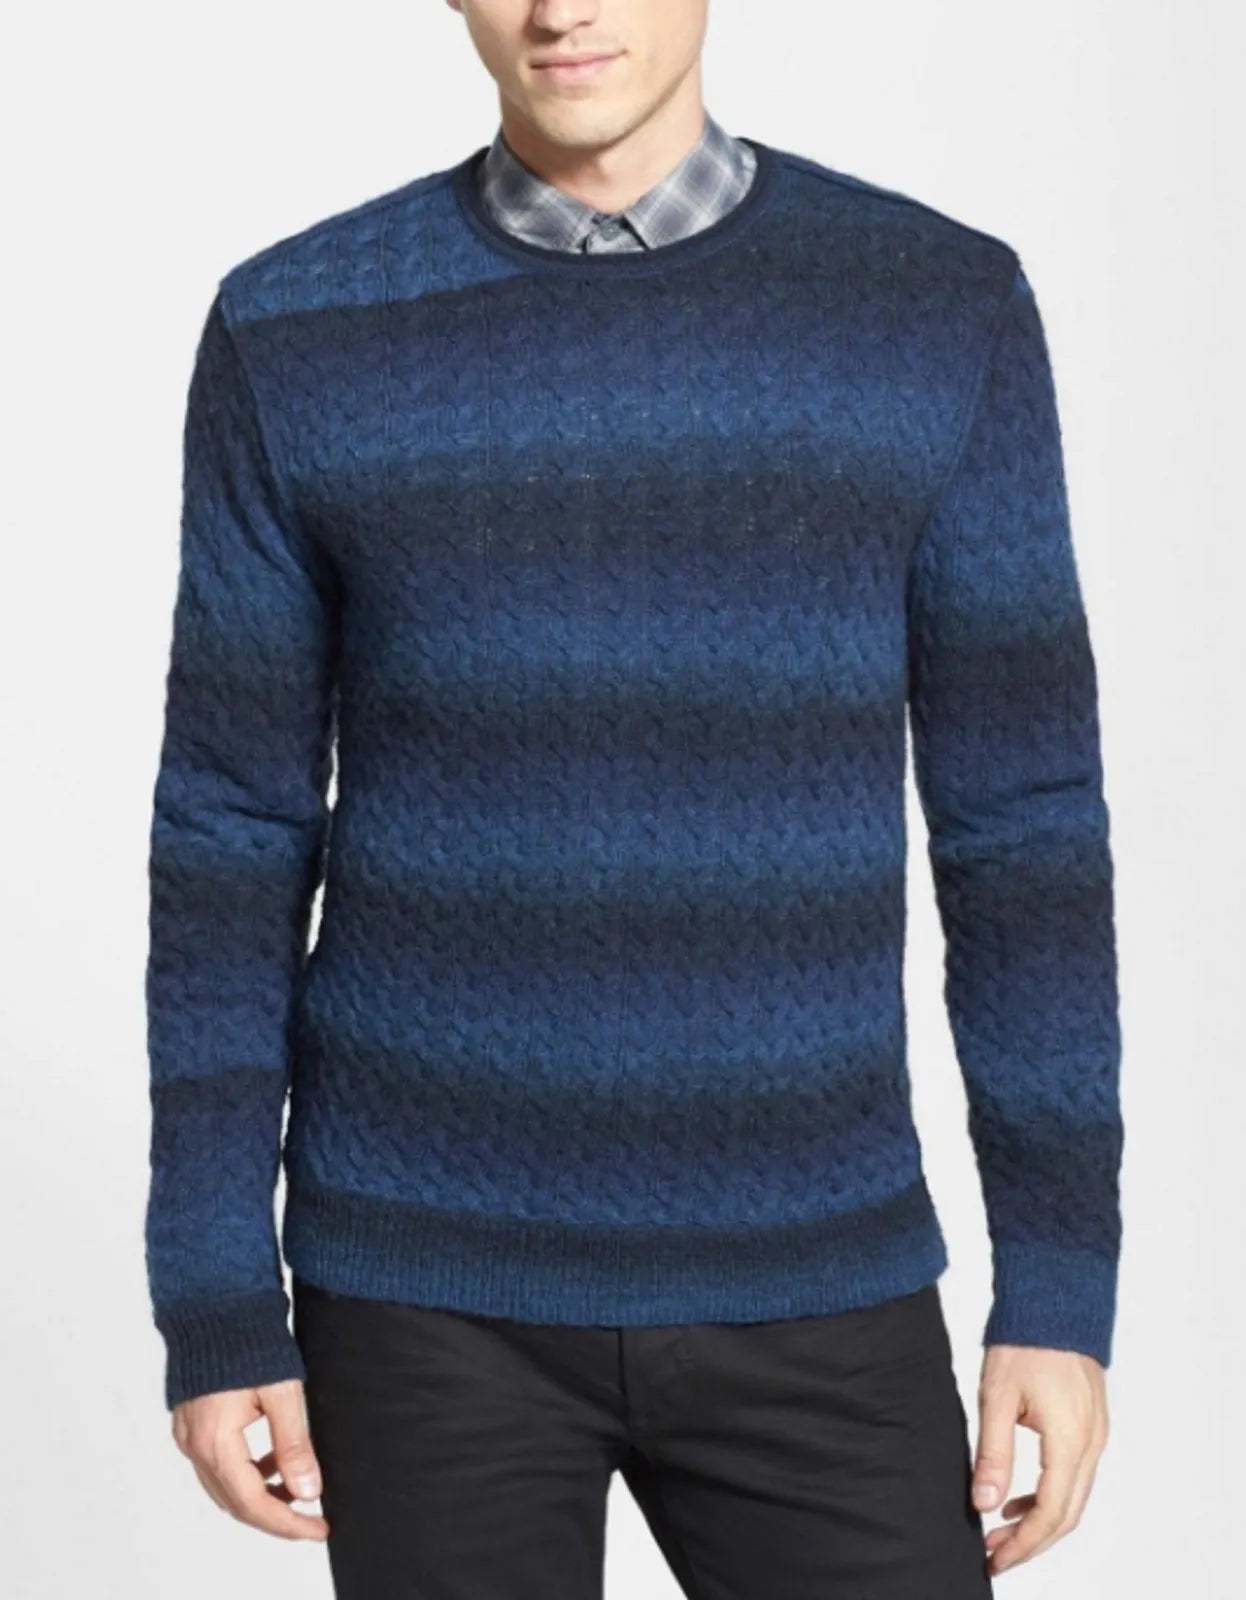 John Varvatos Blue Stripe Space Dye Crew-Neck Sweater sz M